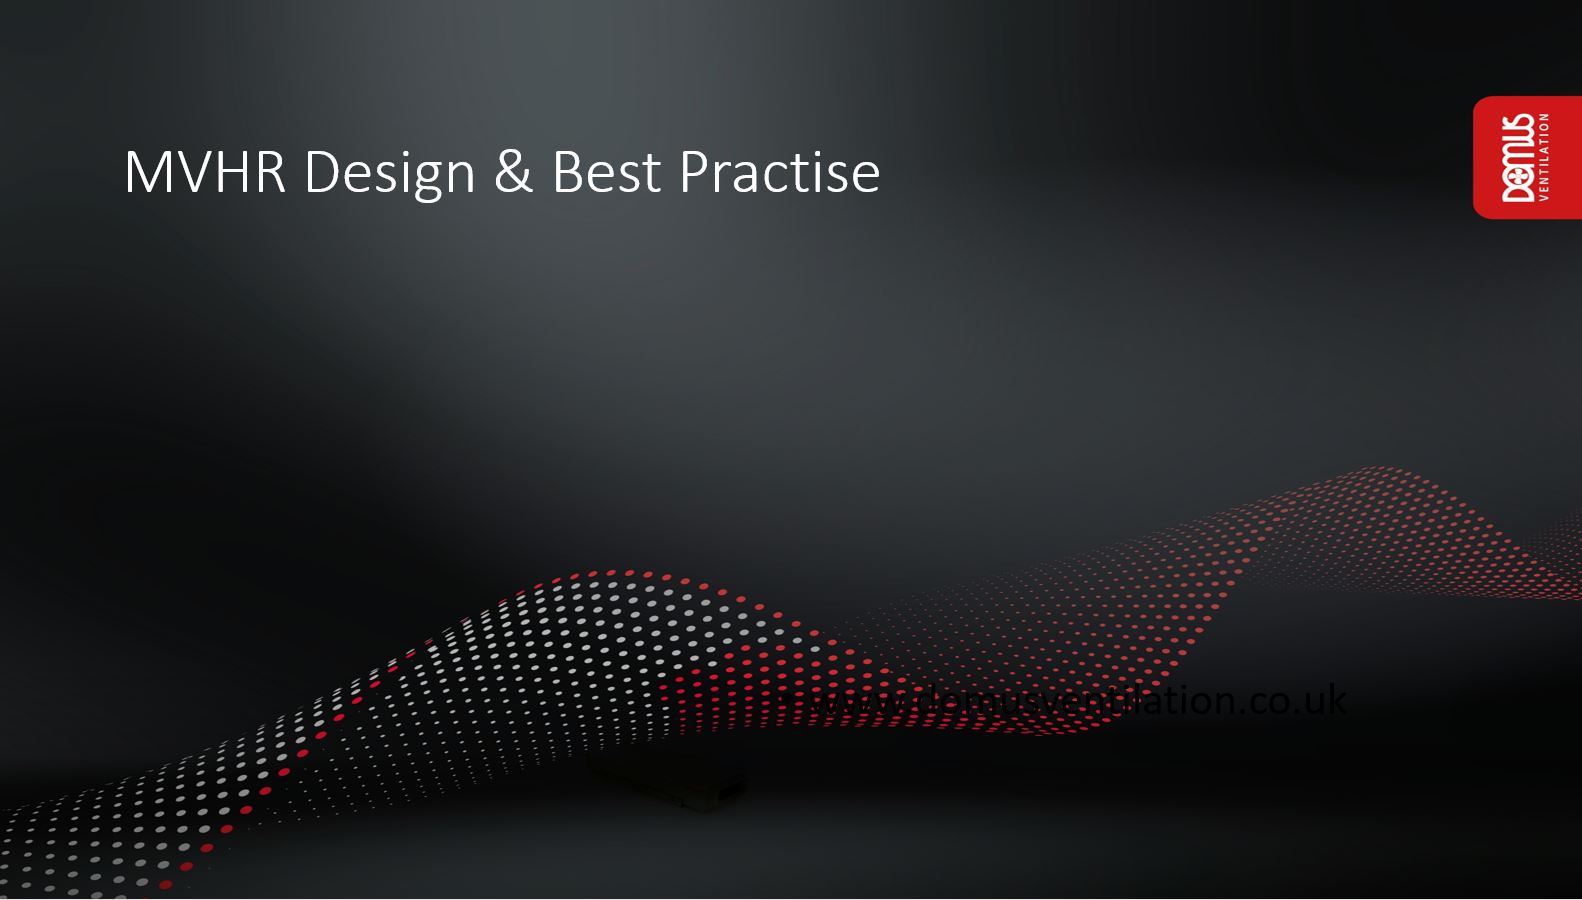 MVHR Design & Best Practise